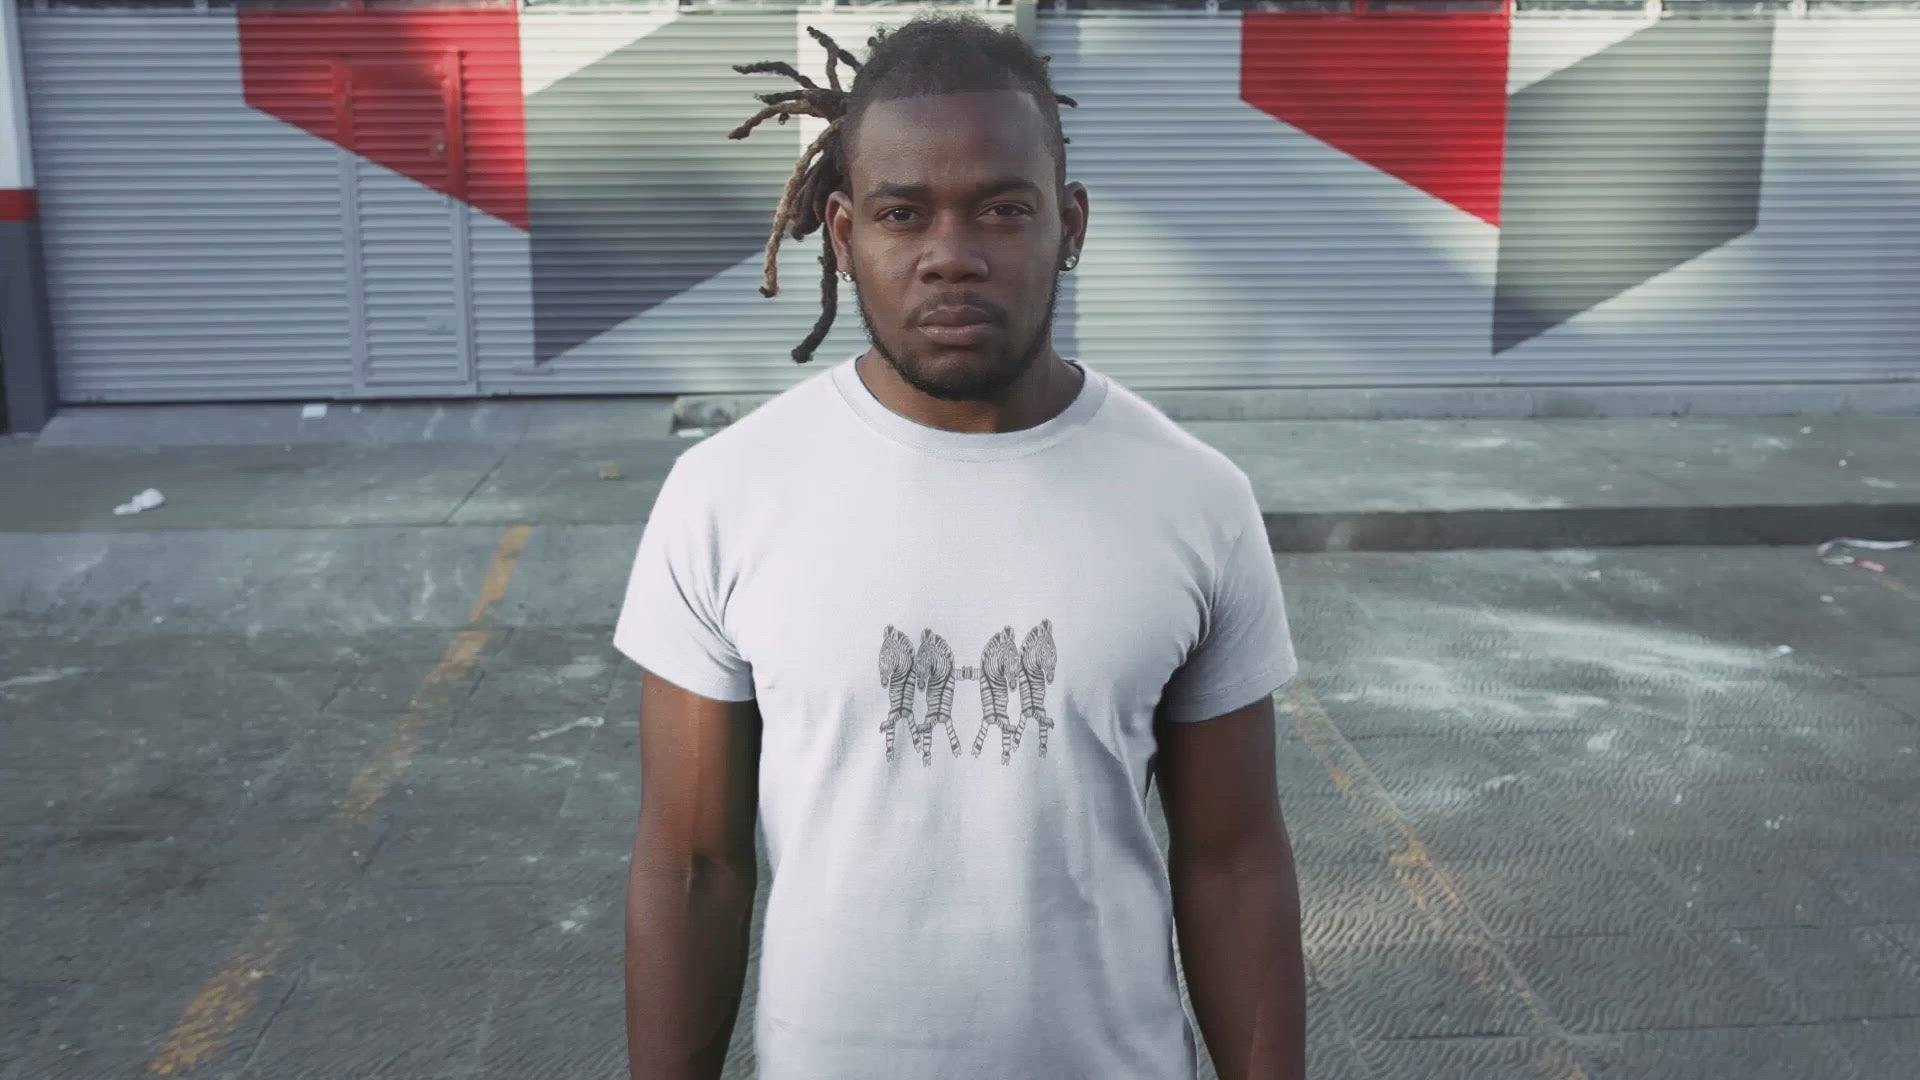 Zebra Roller Skates | 100% Organic Cotton T Shirt worn by a man on a road